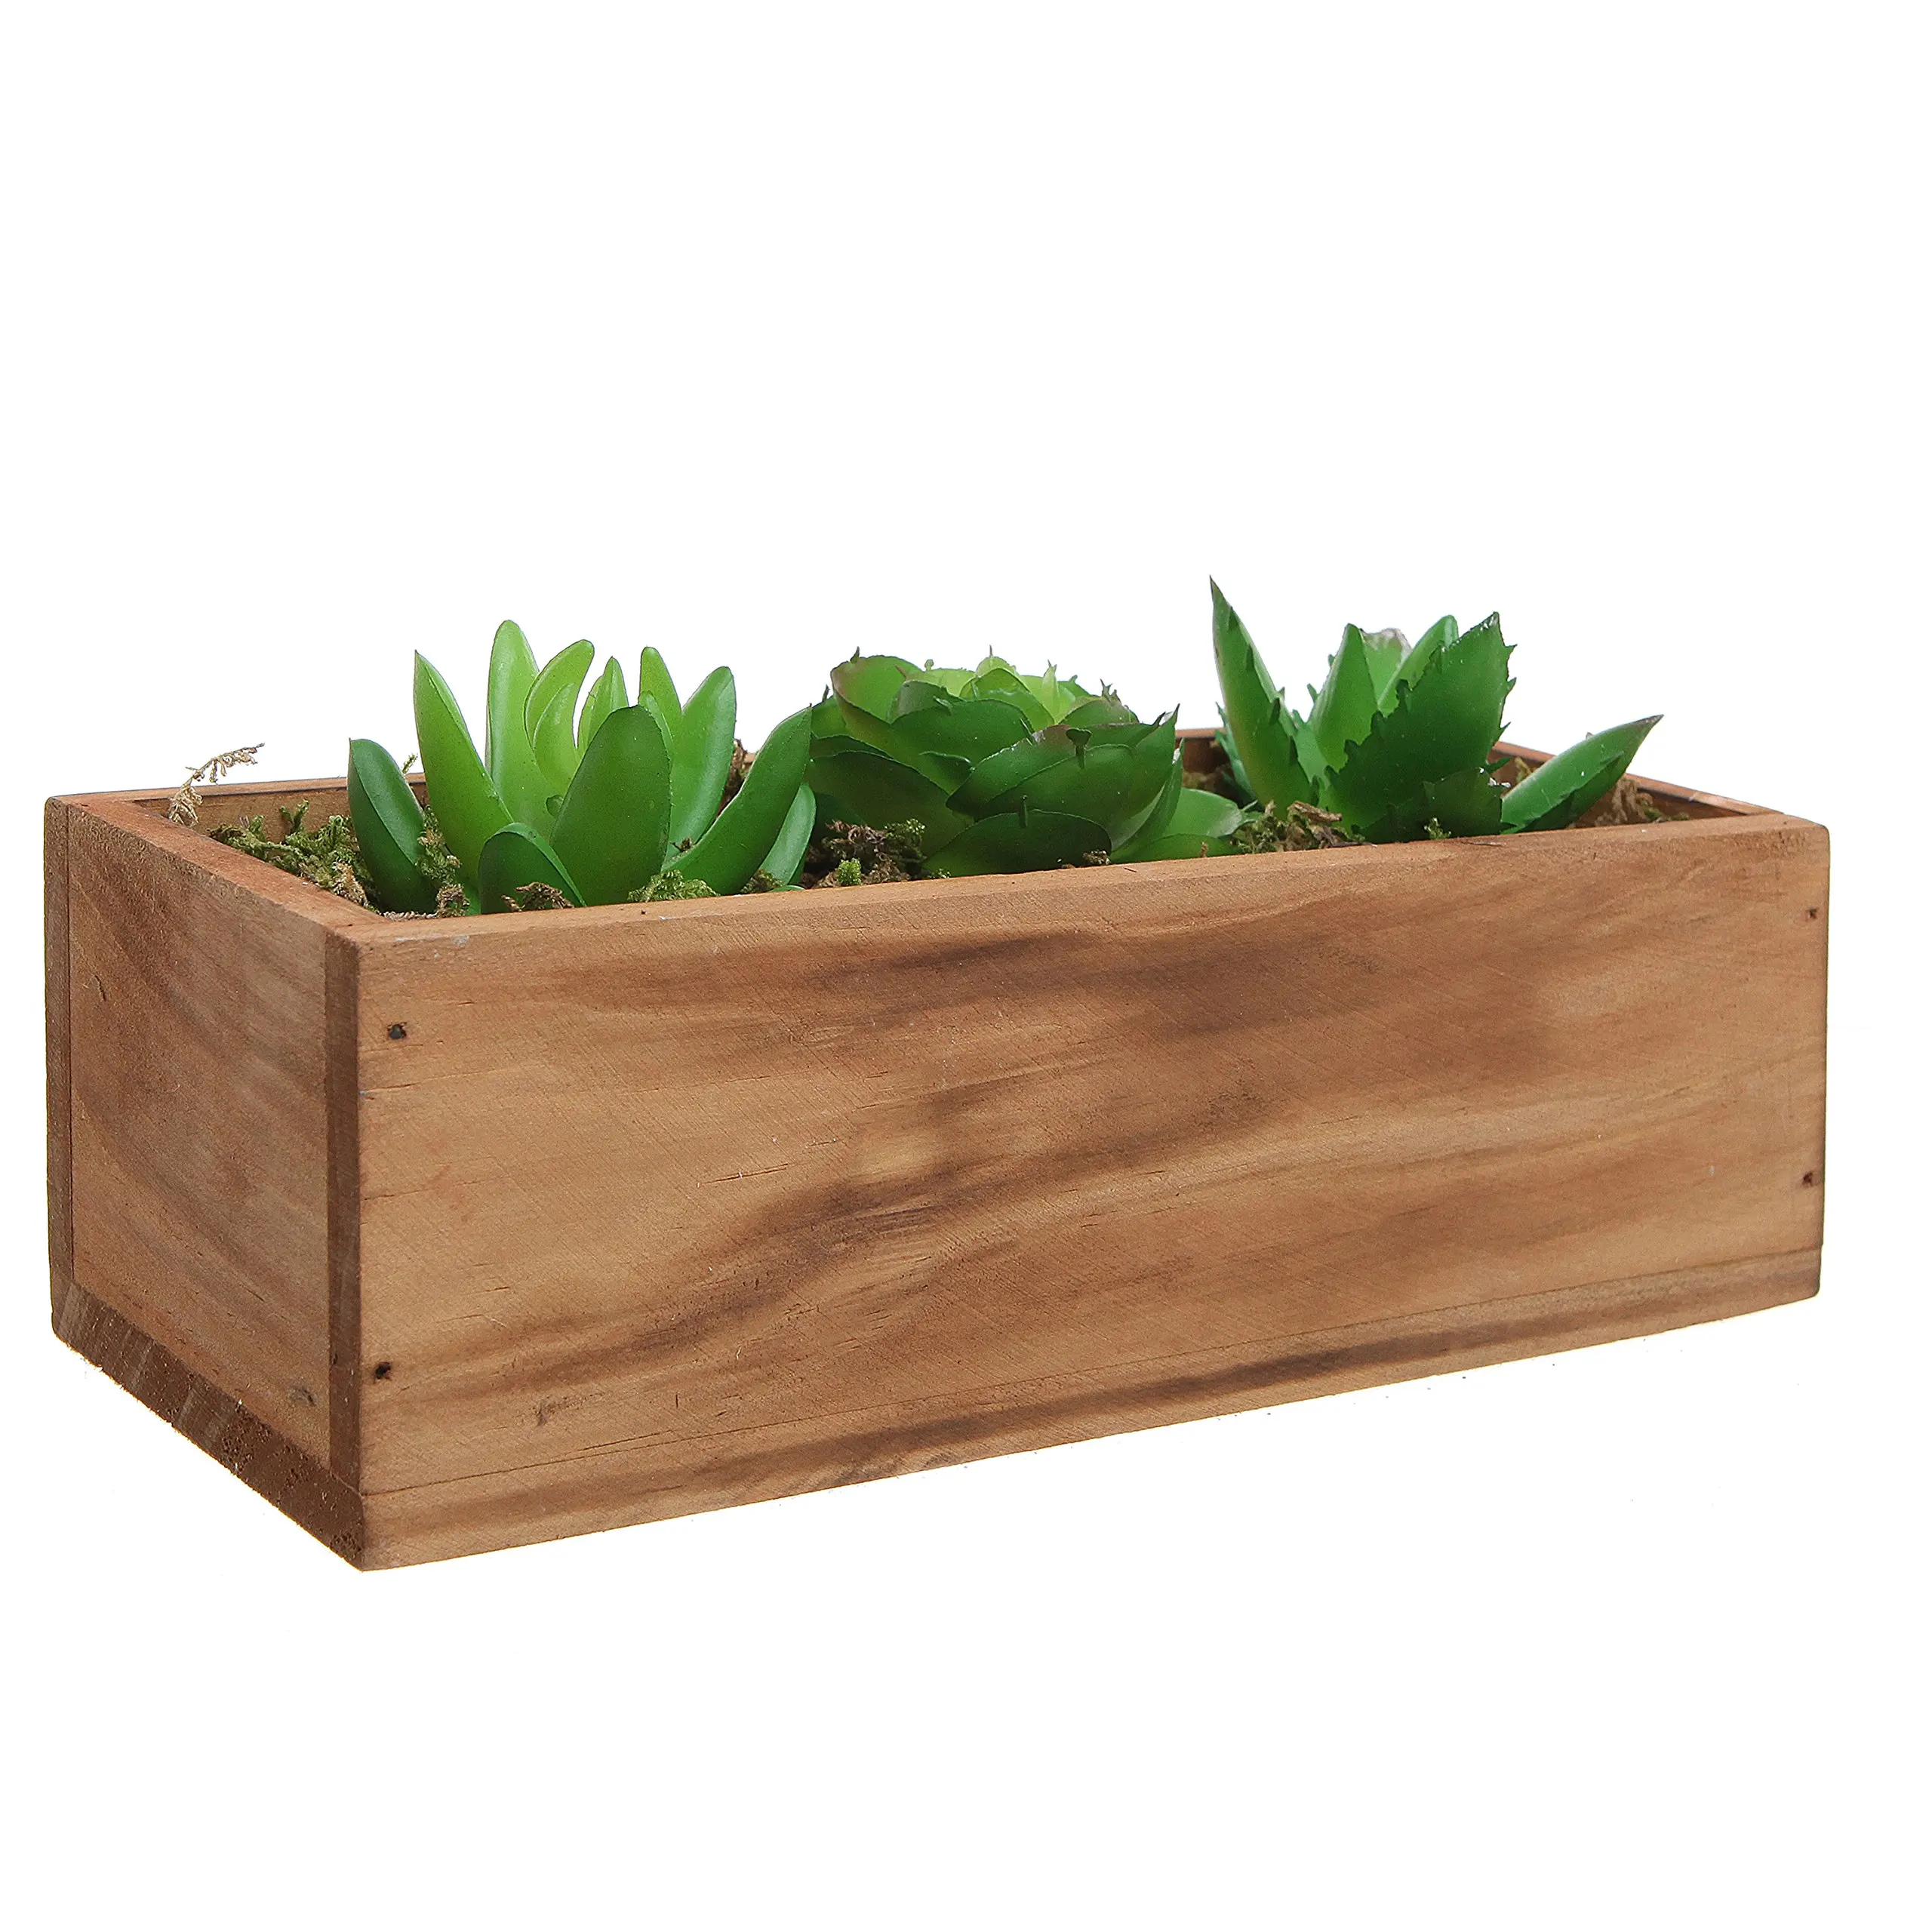 MyGift Artificial Mixed Succulent Plants in Rectangular Brown Wooden Planter Box 